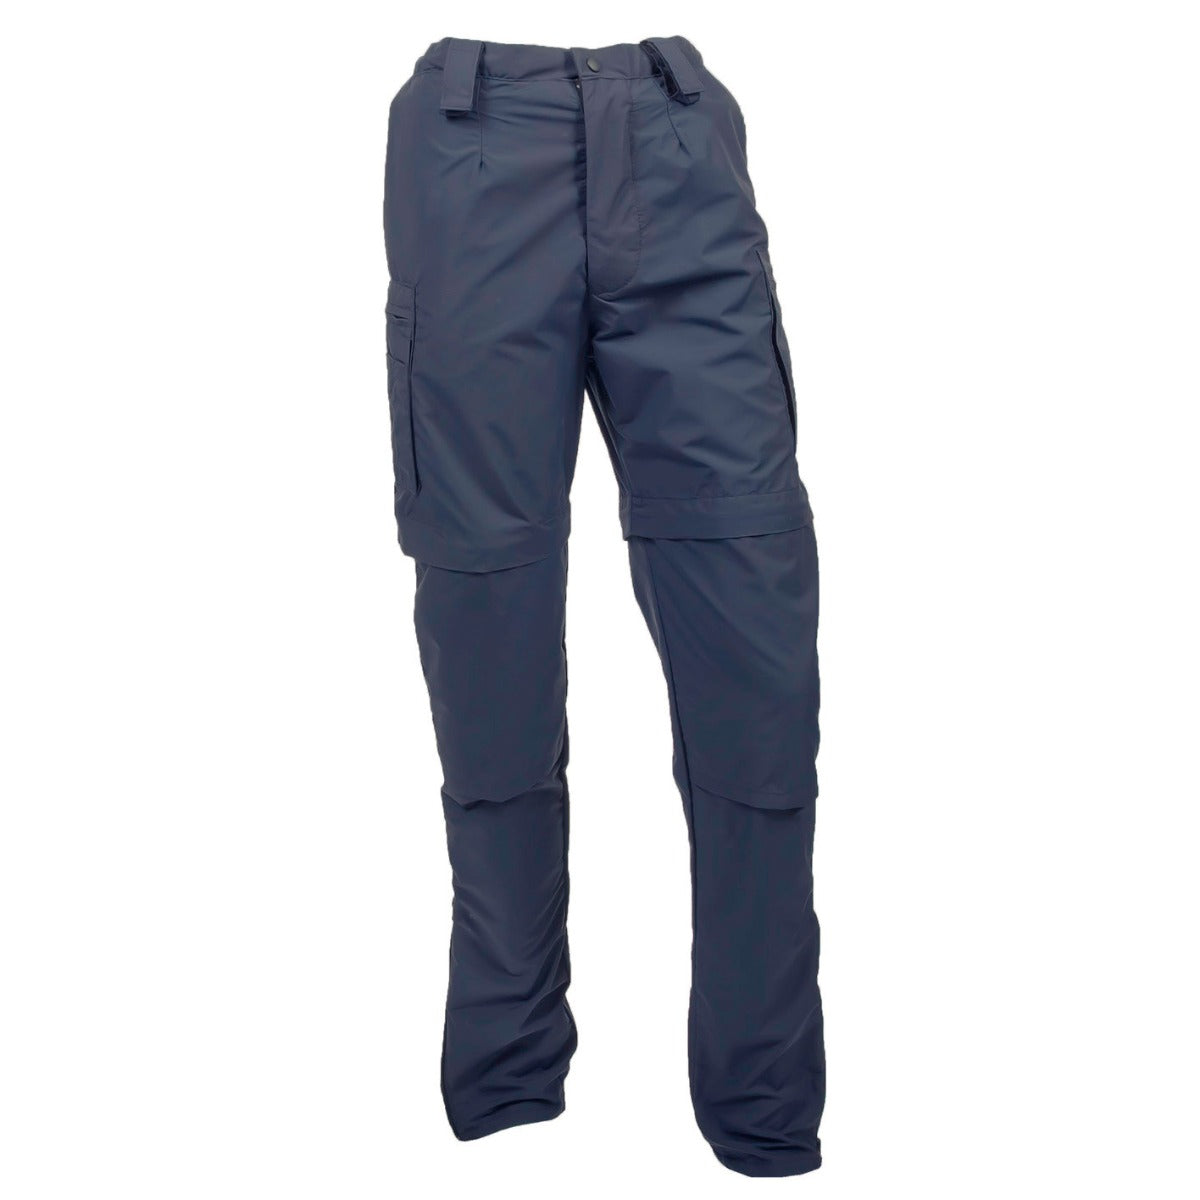 Supplex Zip Leg Pants - Sound Uniform Solutions